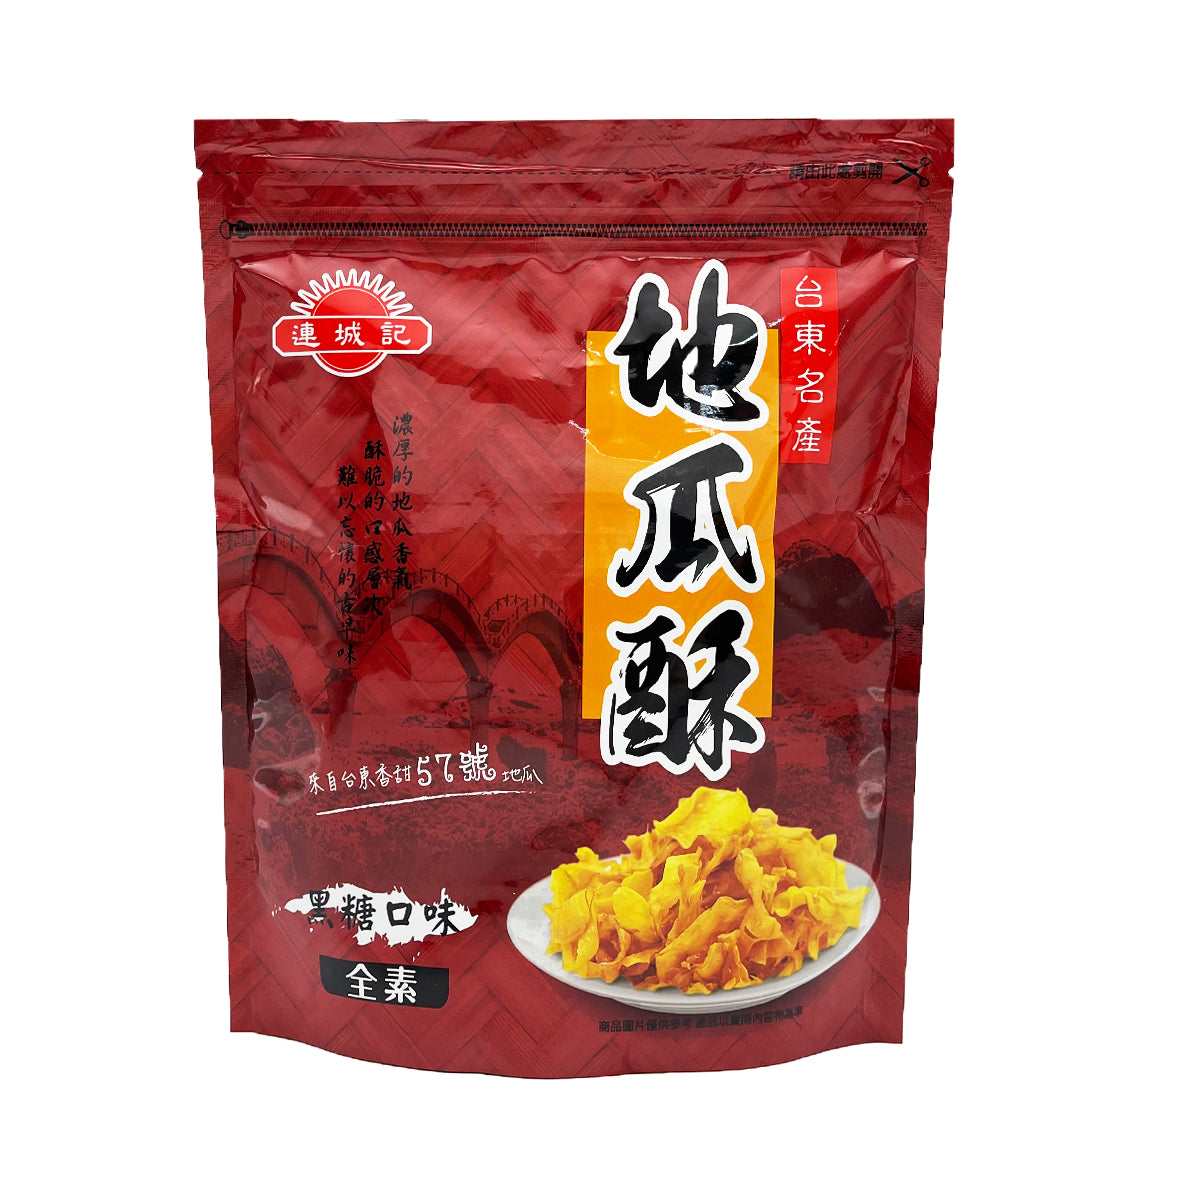 【LIANCHENG】 Brown Sugar Sweet Potato Chips 140g